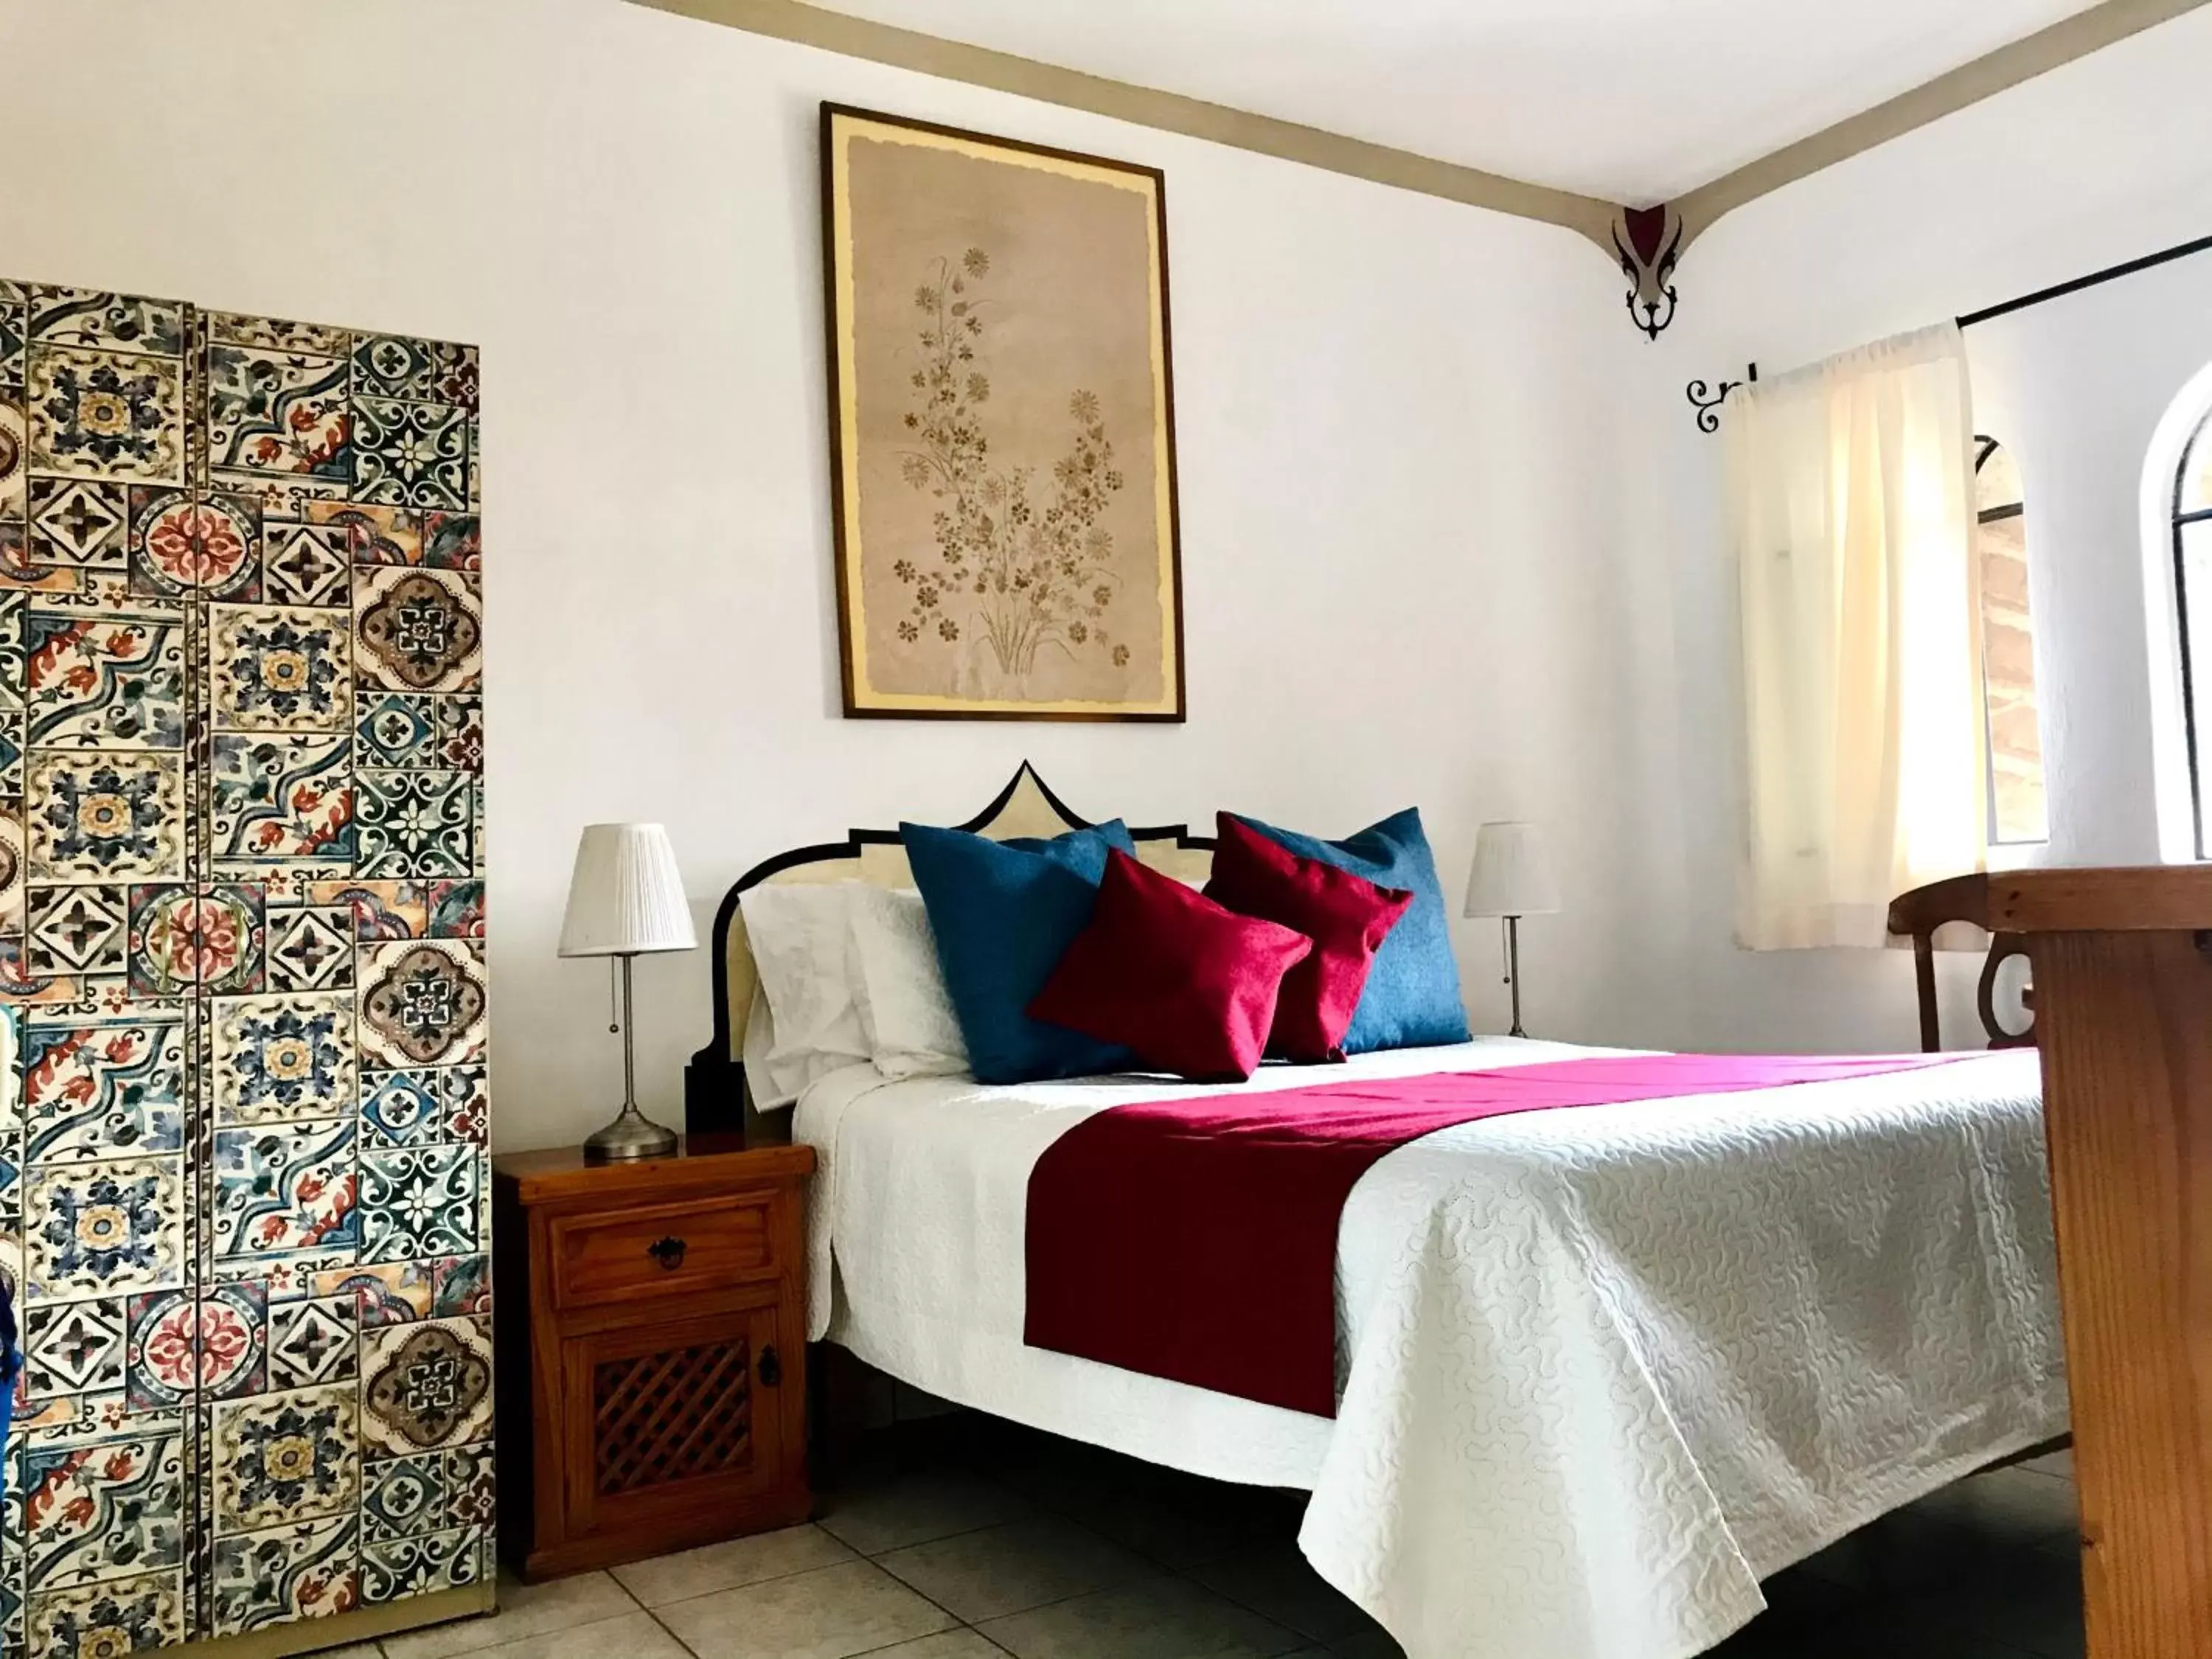 Bed, Room Photo in Hotel Casa Blanca